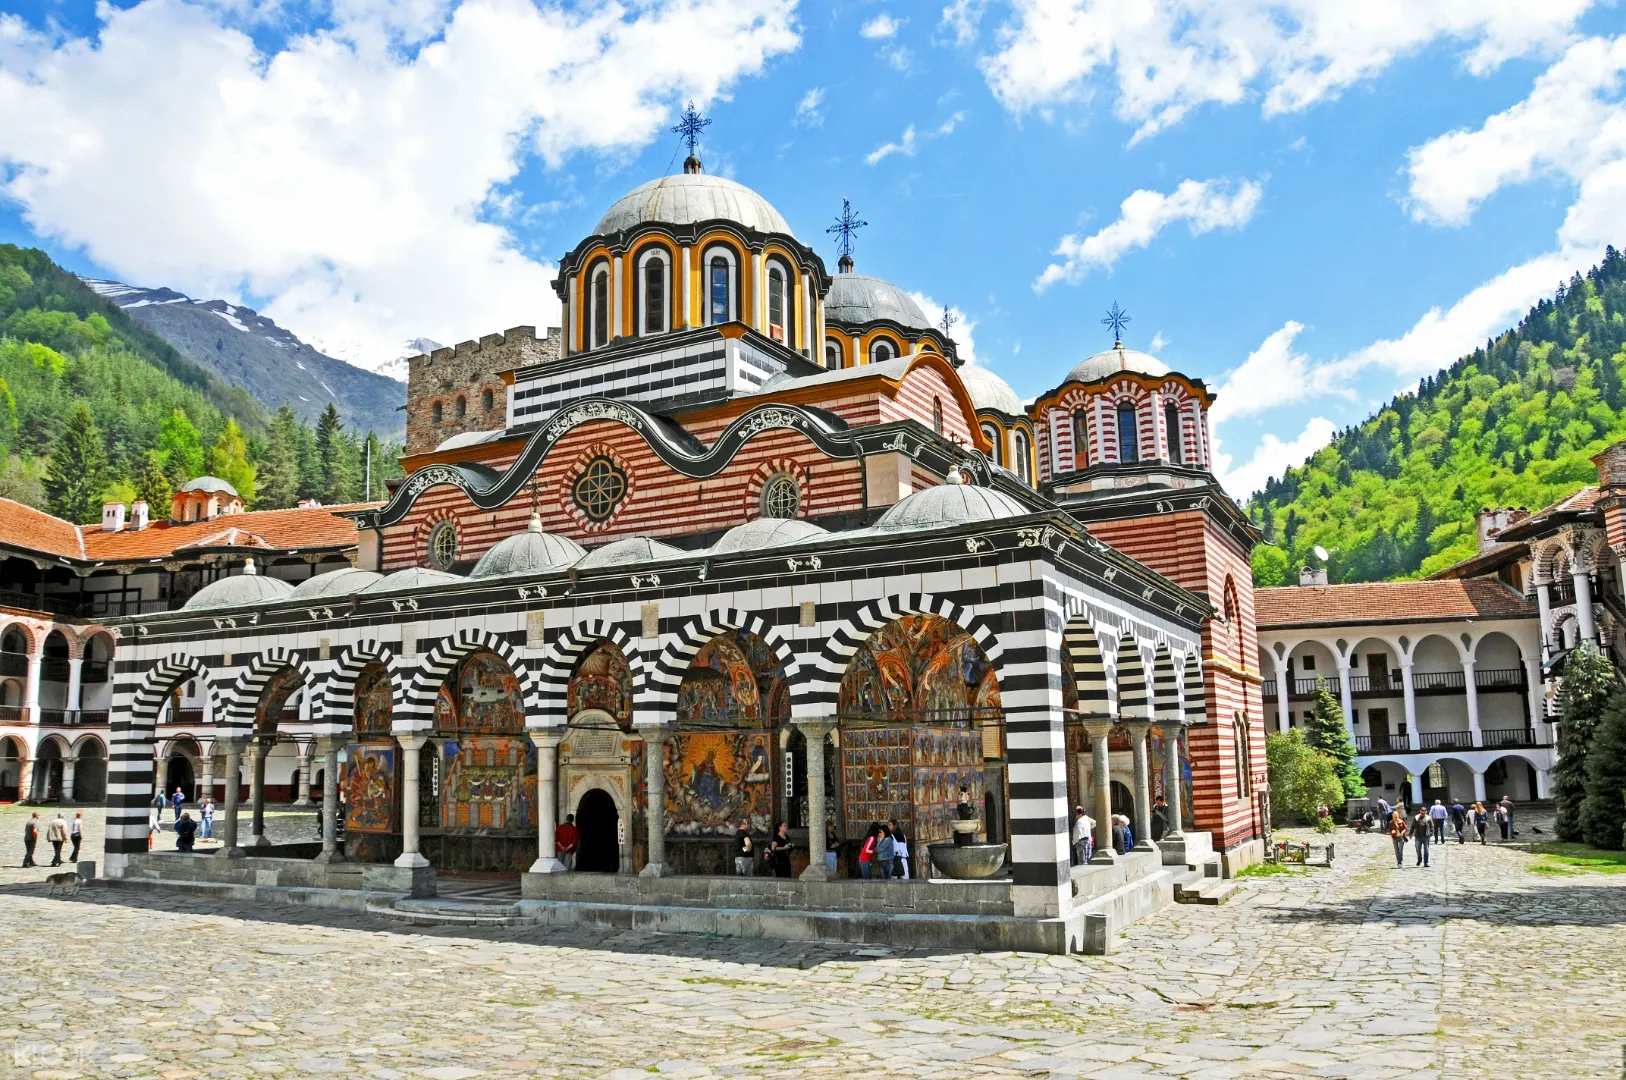 RilaMonasteryandBoyanaChurchTourdariSofia - Tempat Spiritual di Bulgaria yang Wajib Dikunjungi